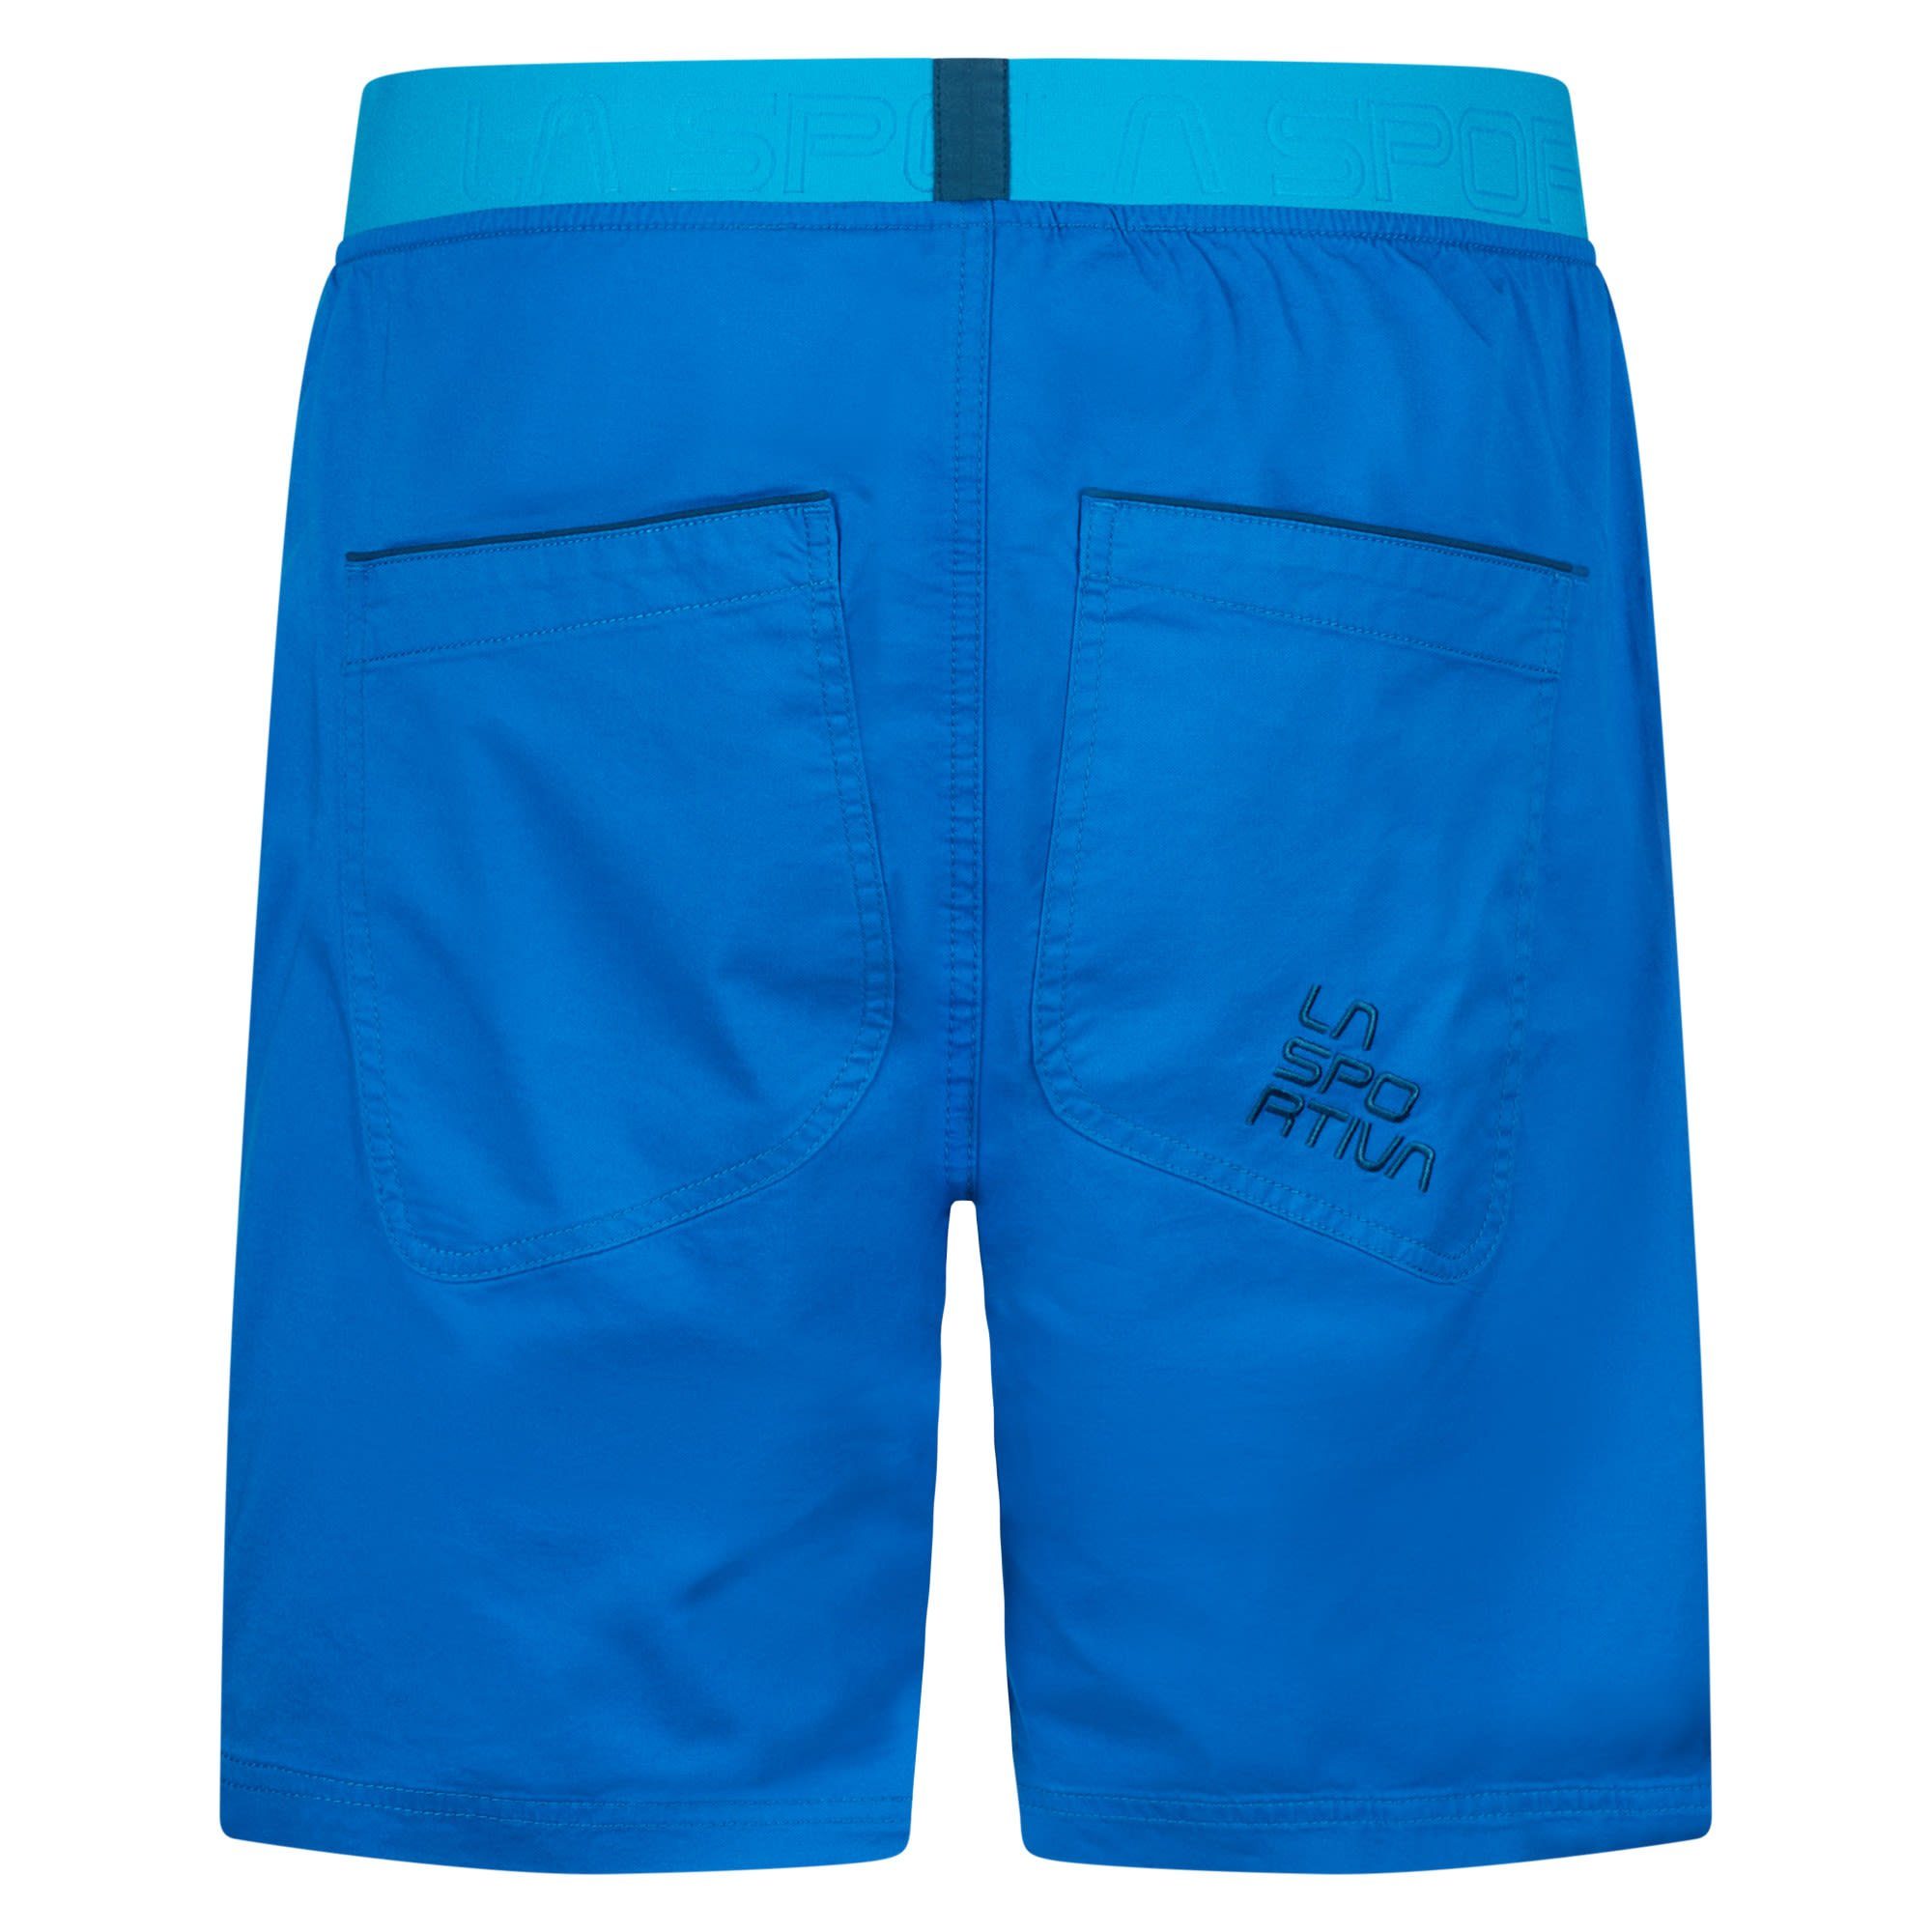 M - Maui Herren La Sportiva Esquirol Blue Electric Shorts Short La Sportiva Strandshorts